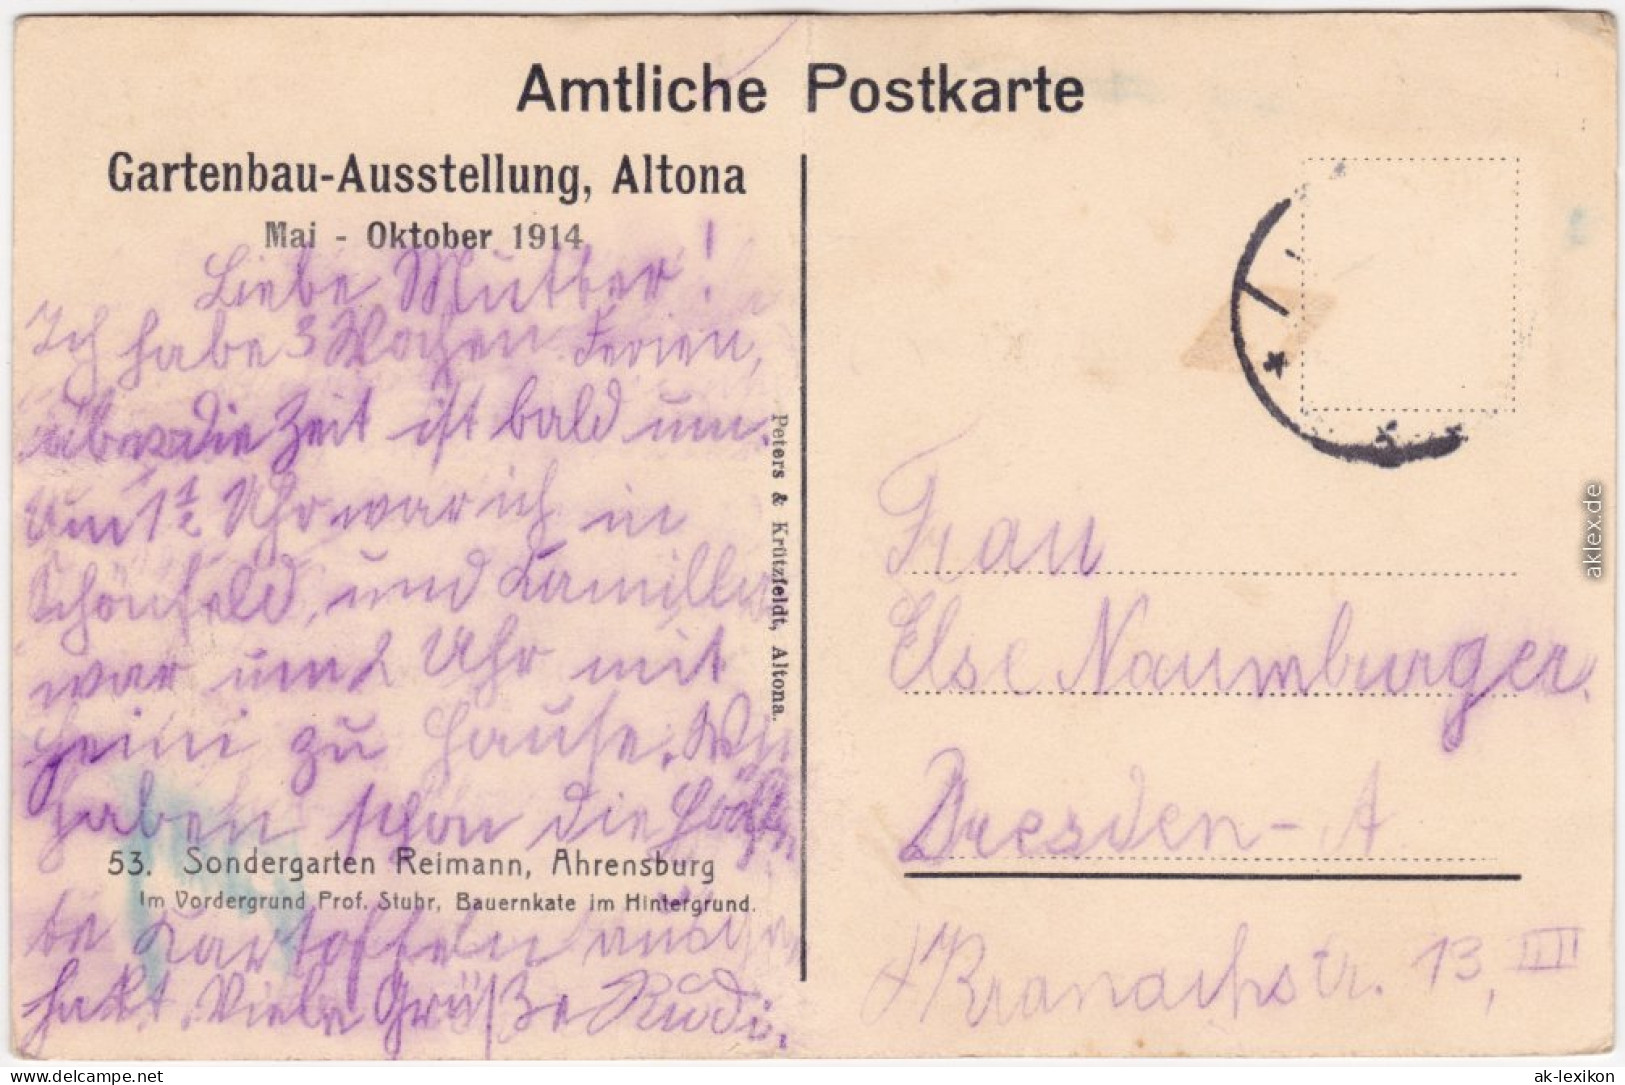 Altona Hamburg Sondergarten Reimann, Ahrensburg - Prof. Stubr, Bauernkate 1914 - Altona